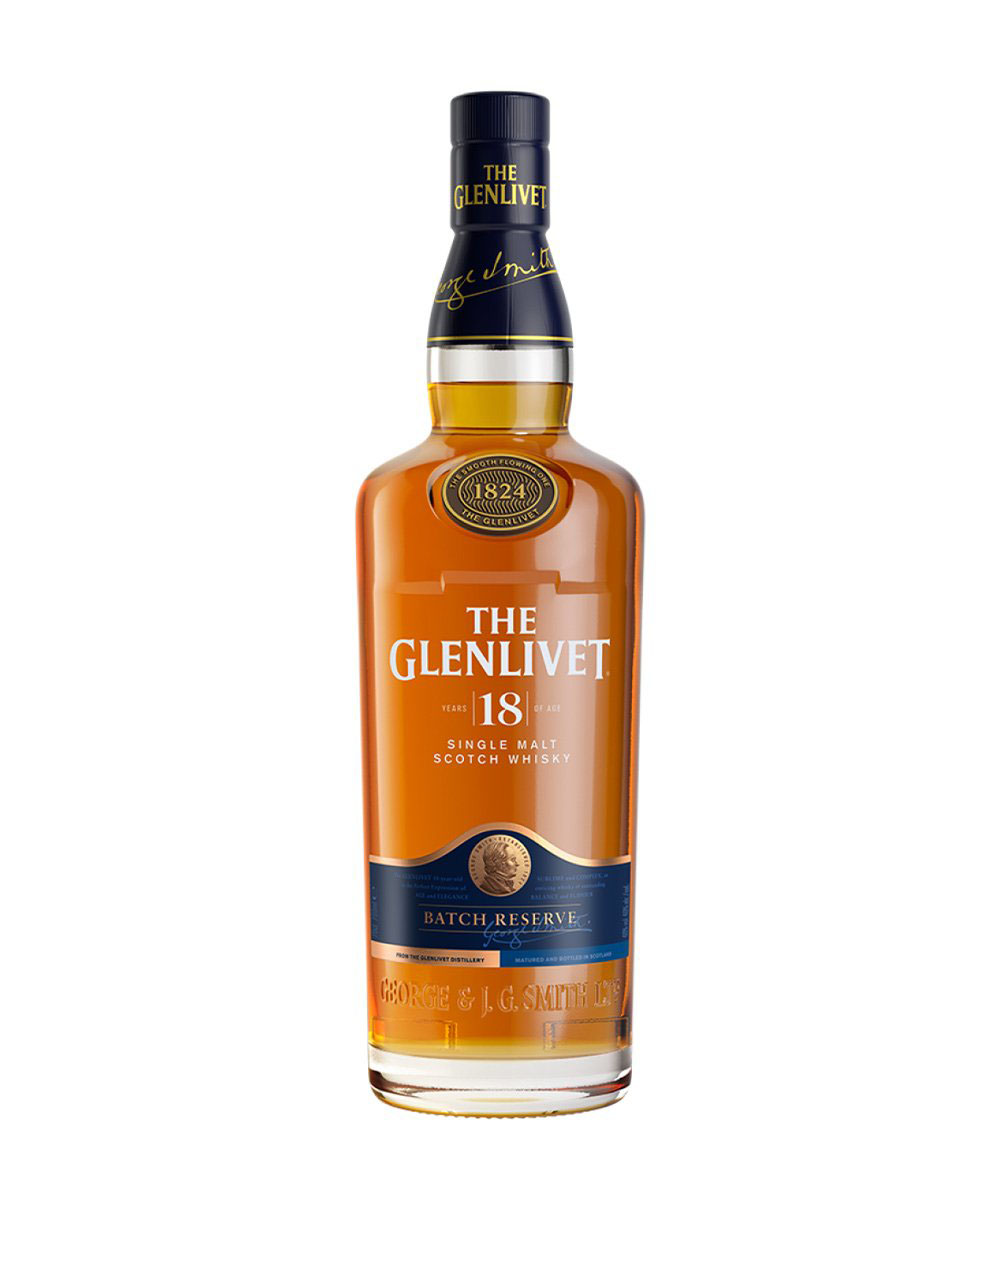 The Glenlivet 18 Year Old Scotch whisky